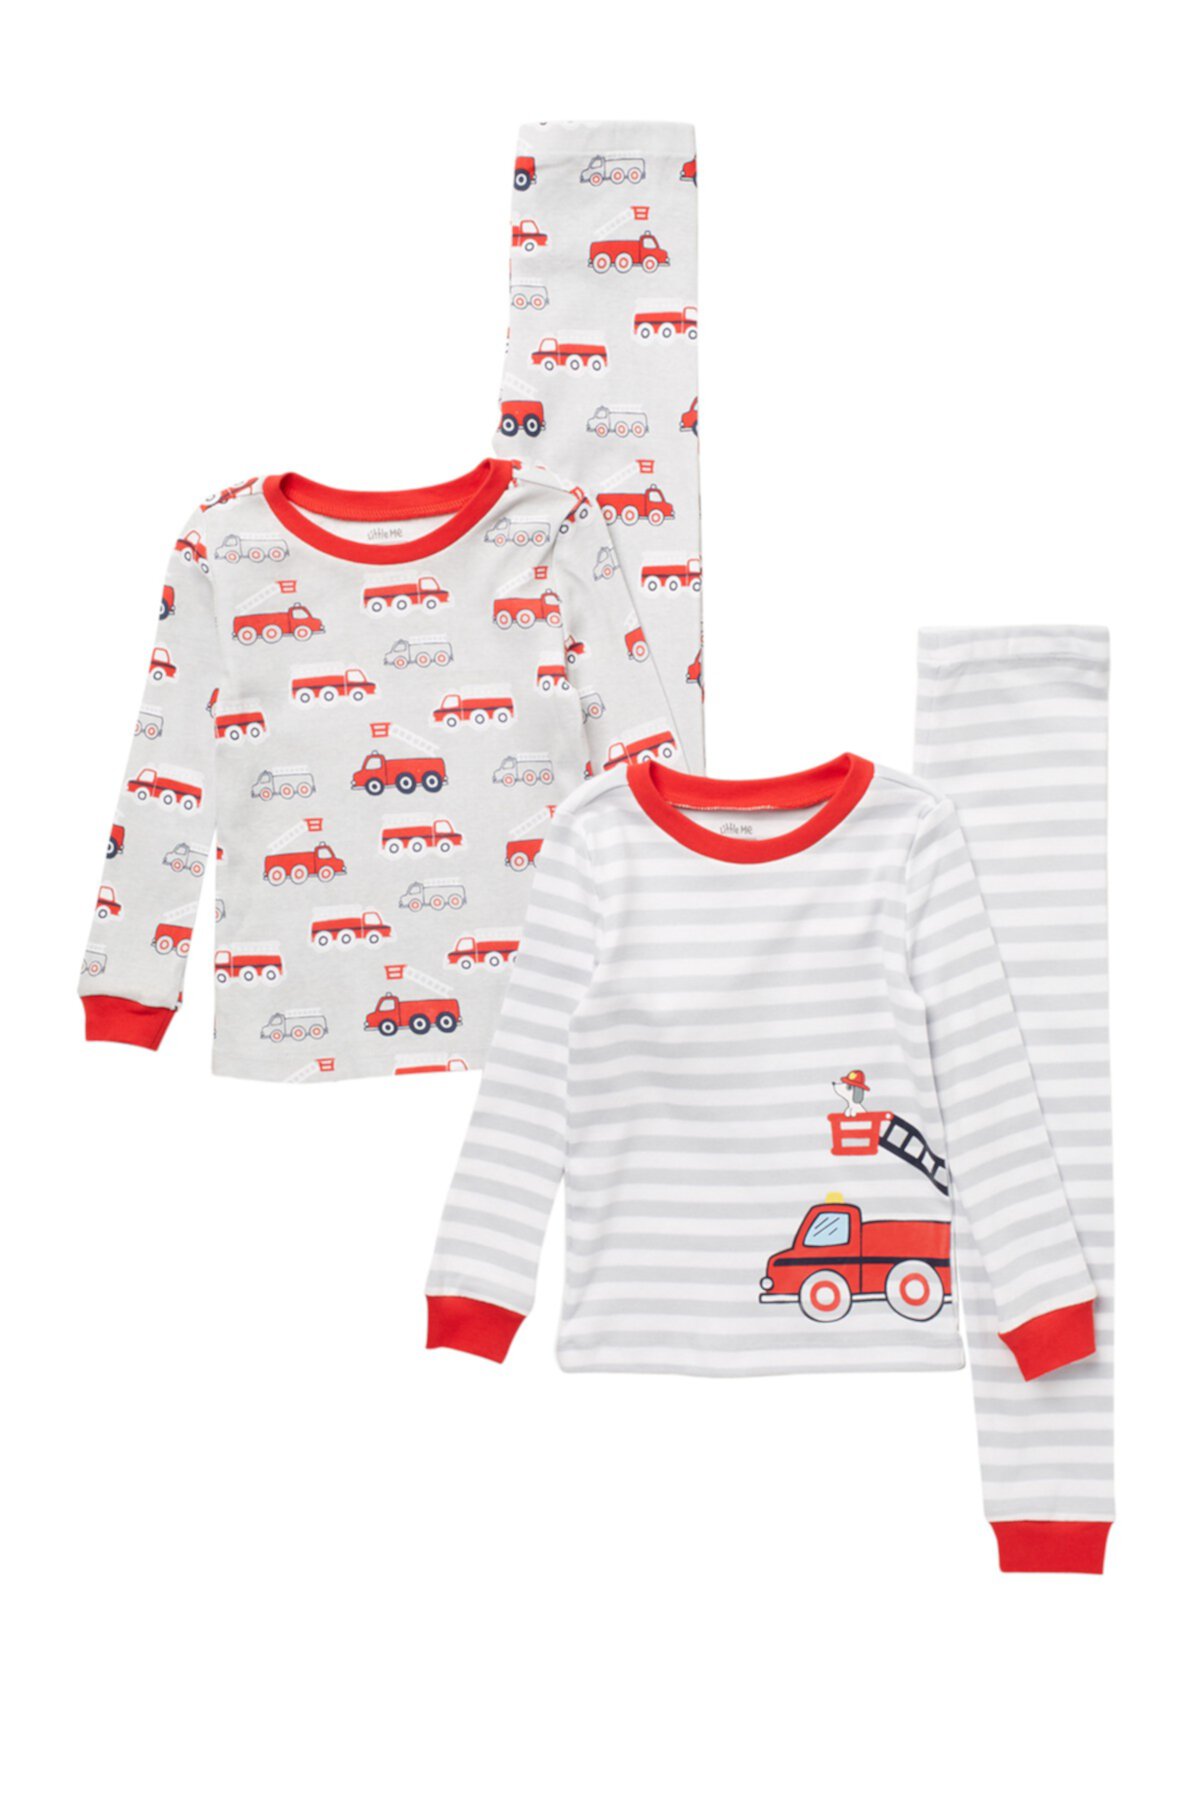 Firetrucks Long Sleeve Pajamas - Set of 2 (Toddler Boys) Little Me